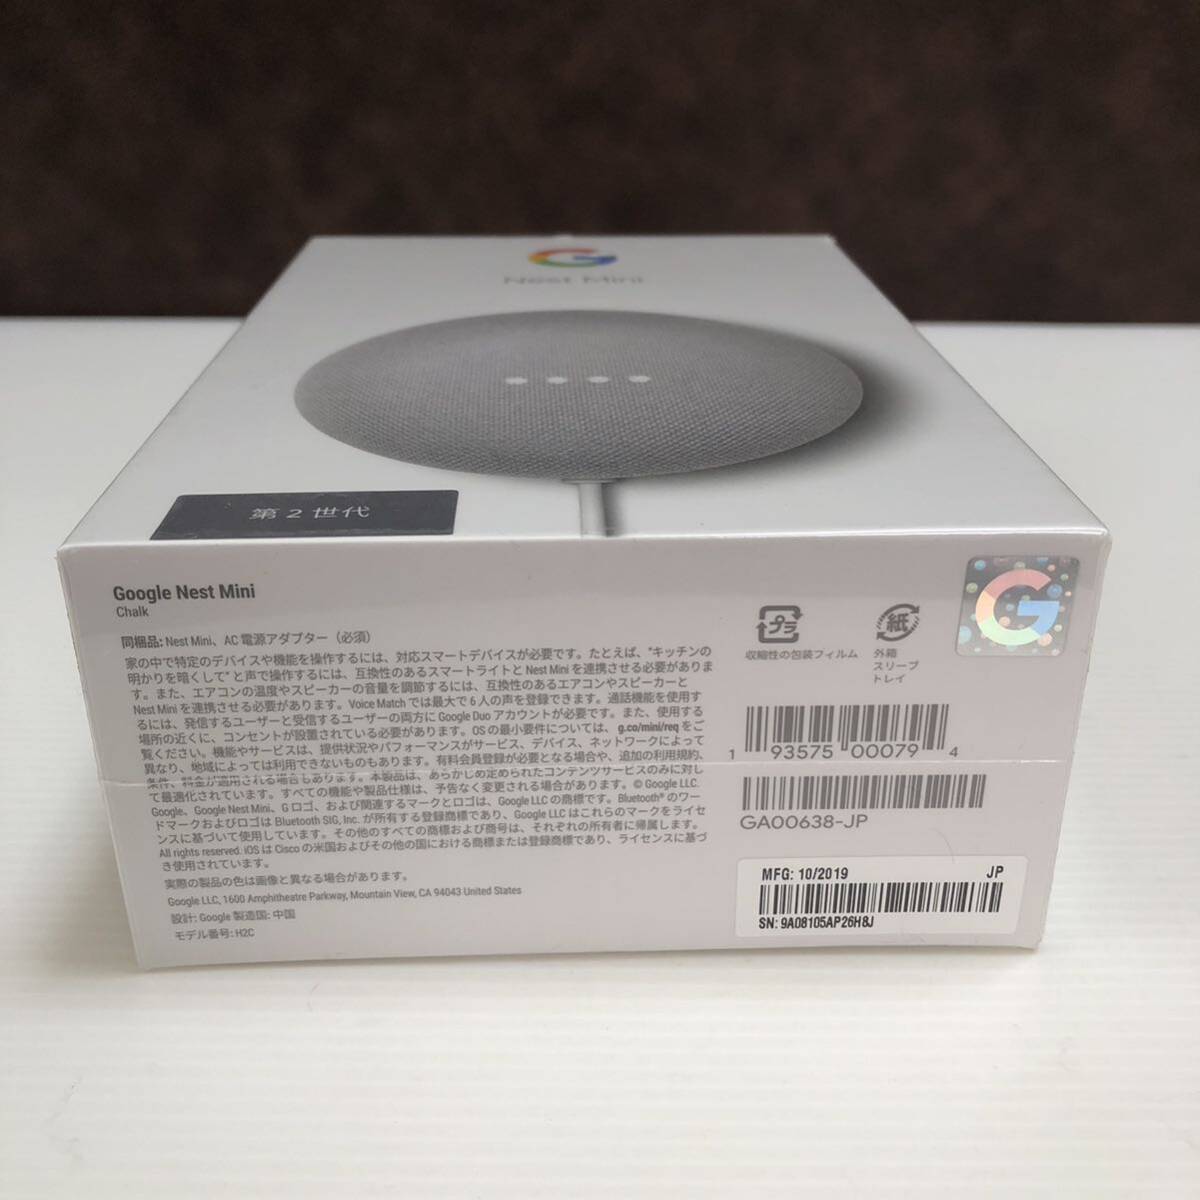 m250-0834-12 【未開封品】 Google グーグル スマートスピーカー Google Nest Mini GA00638-JP Chalk チョーク 第2世代_画像4